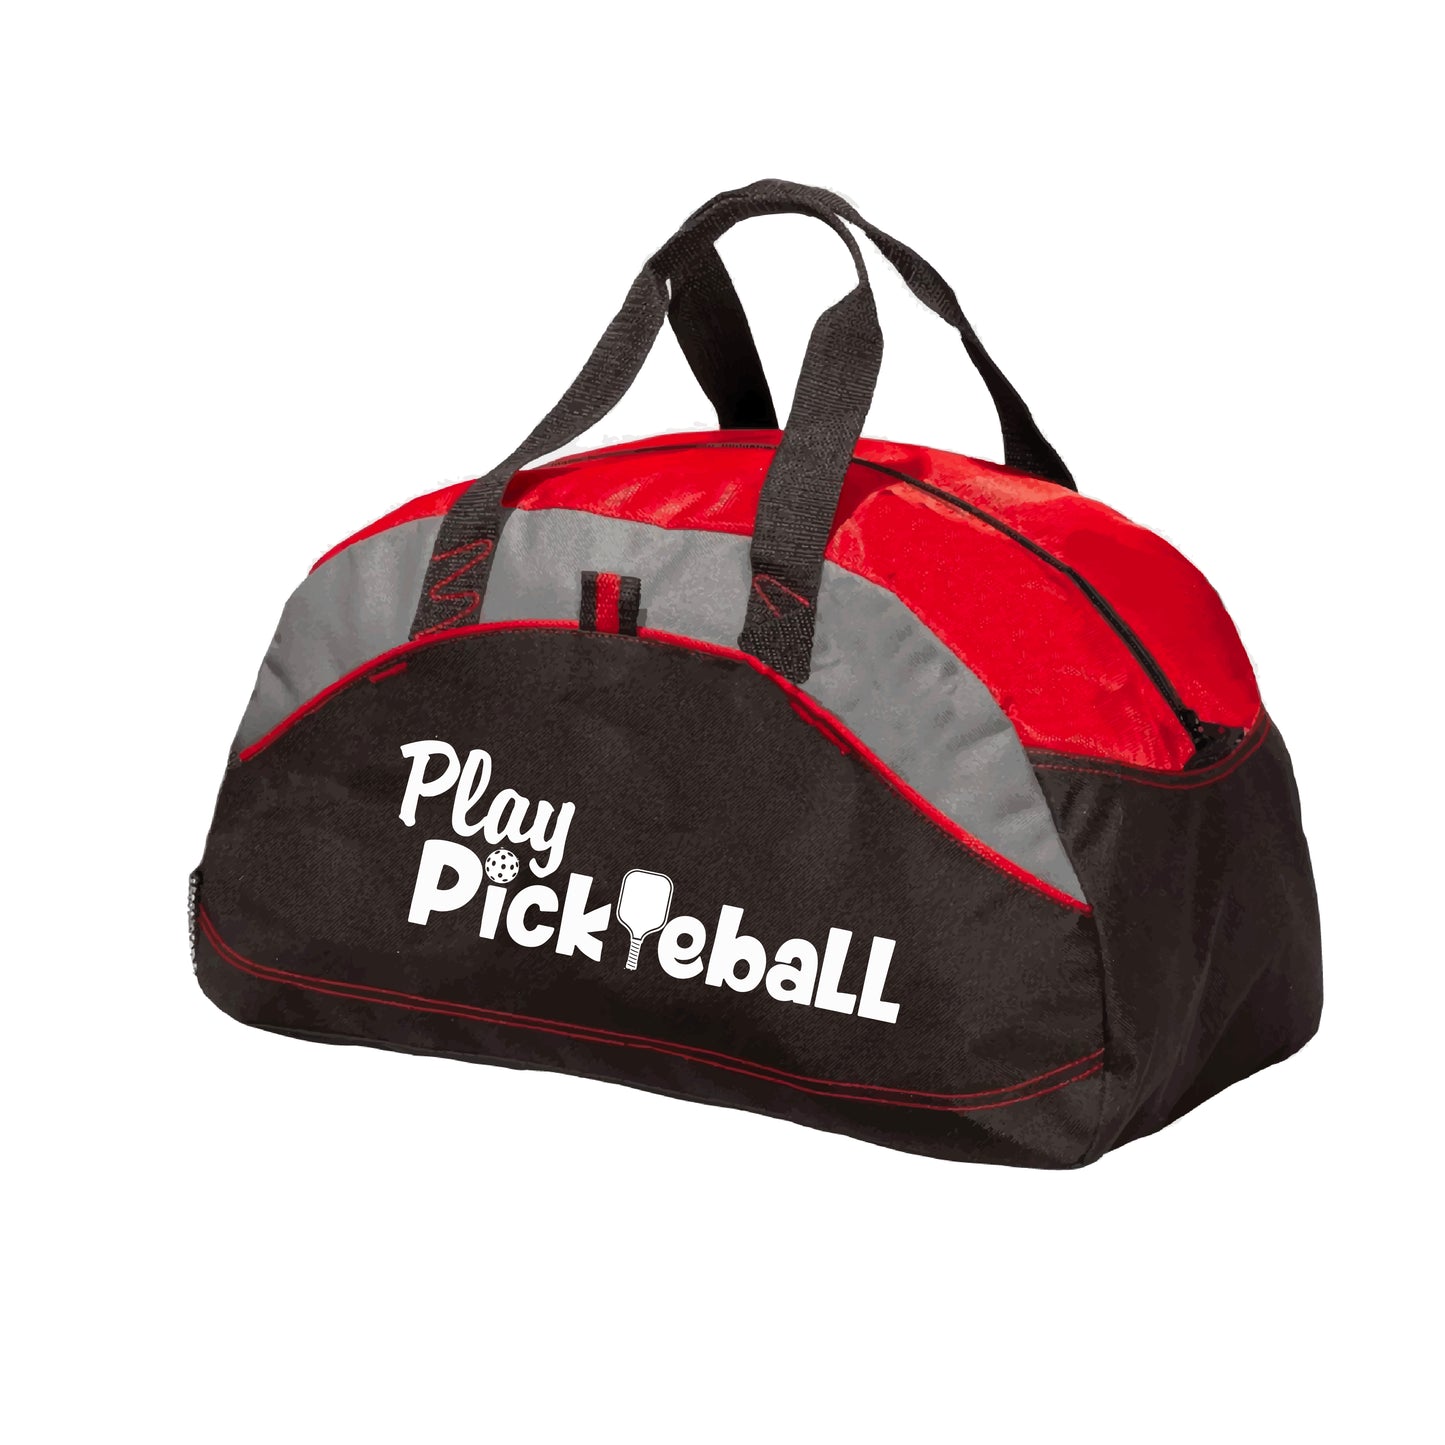 Play Pickleball | Pickleball Sports Duffel | Medium Size Court Bag